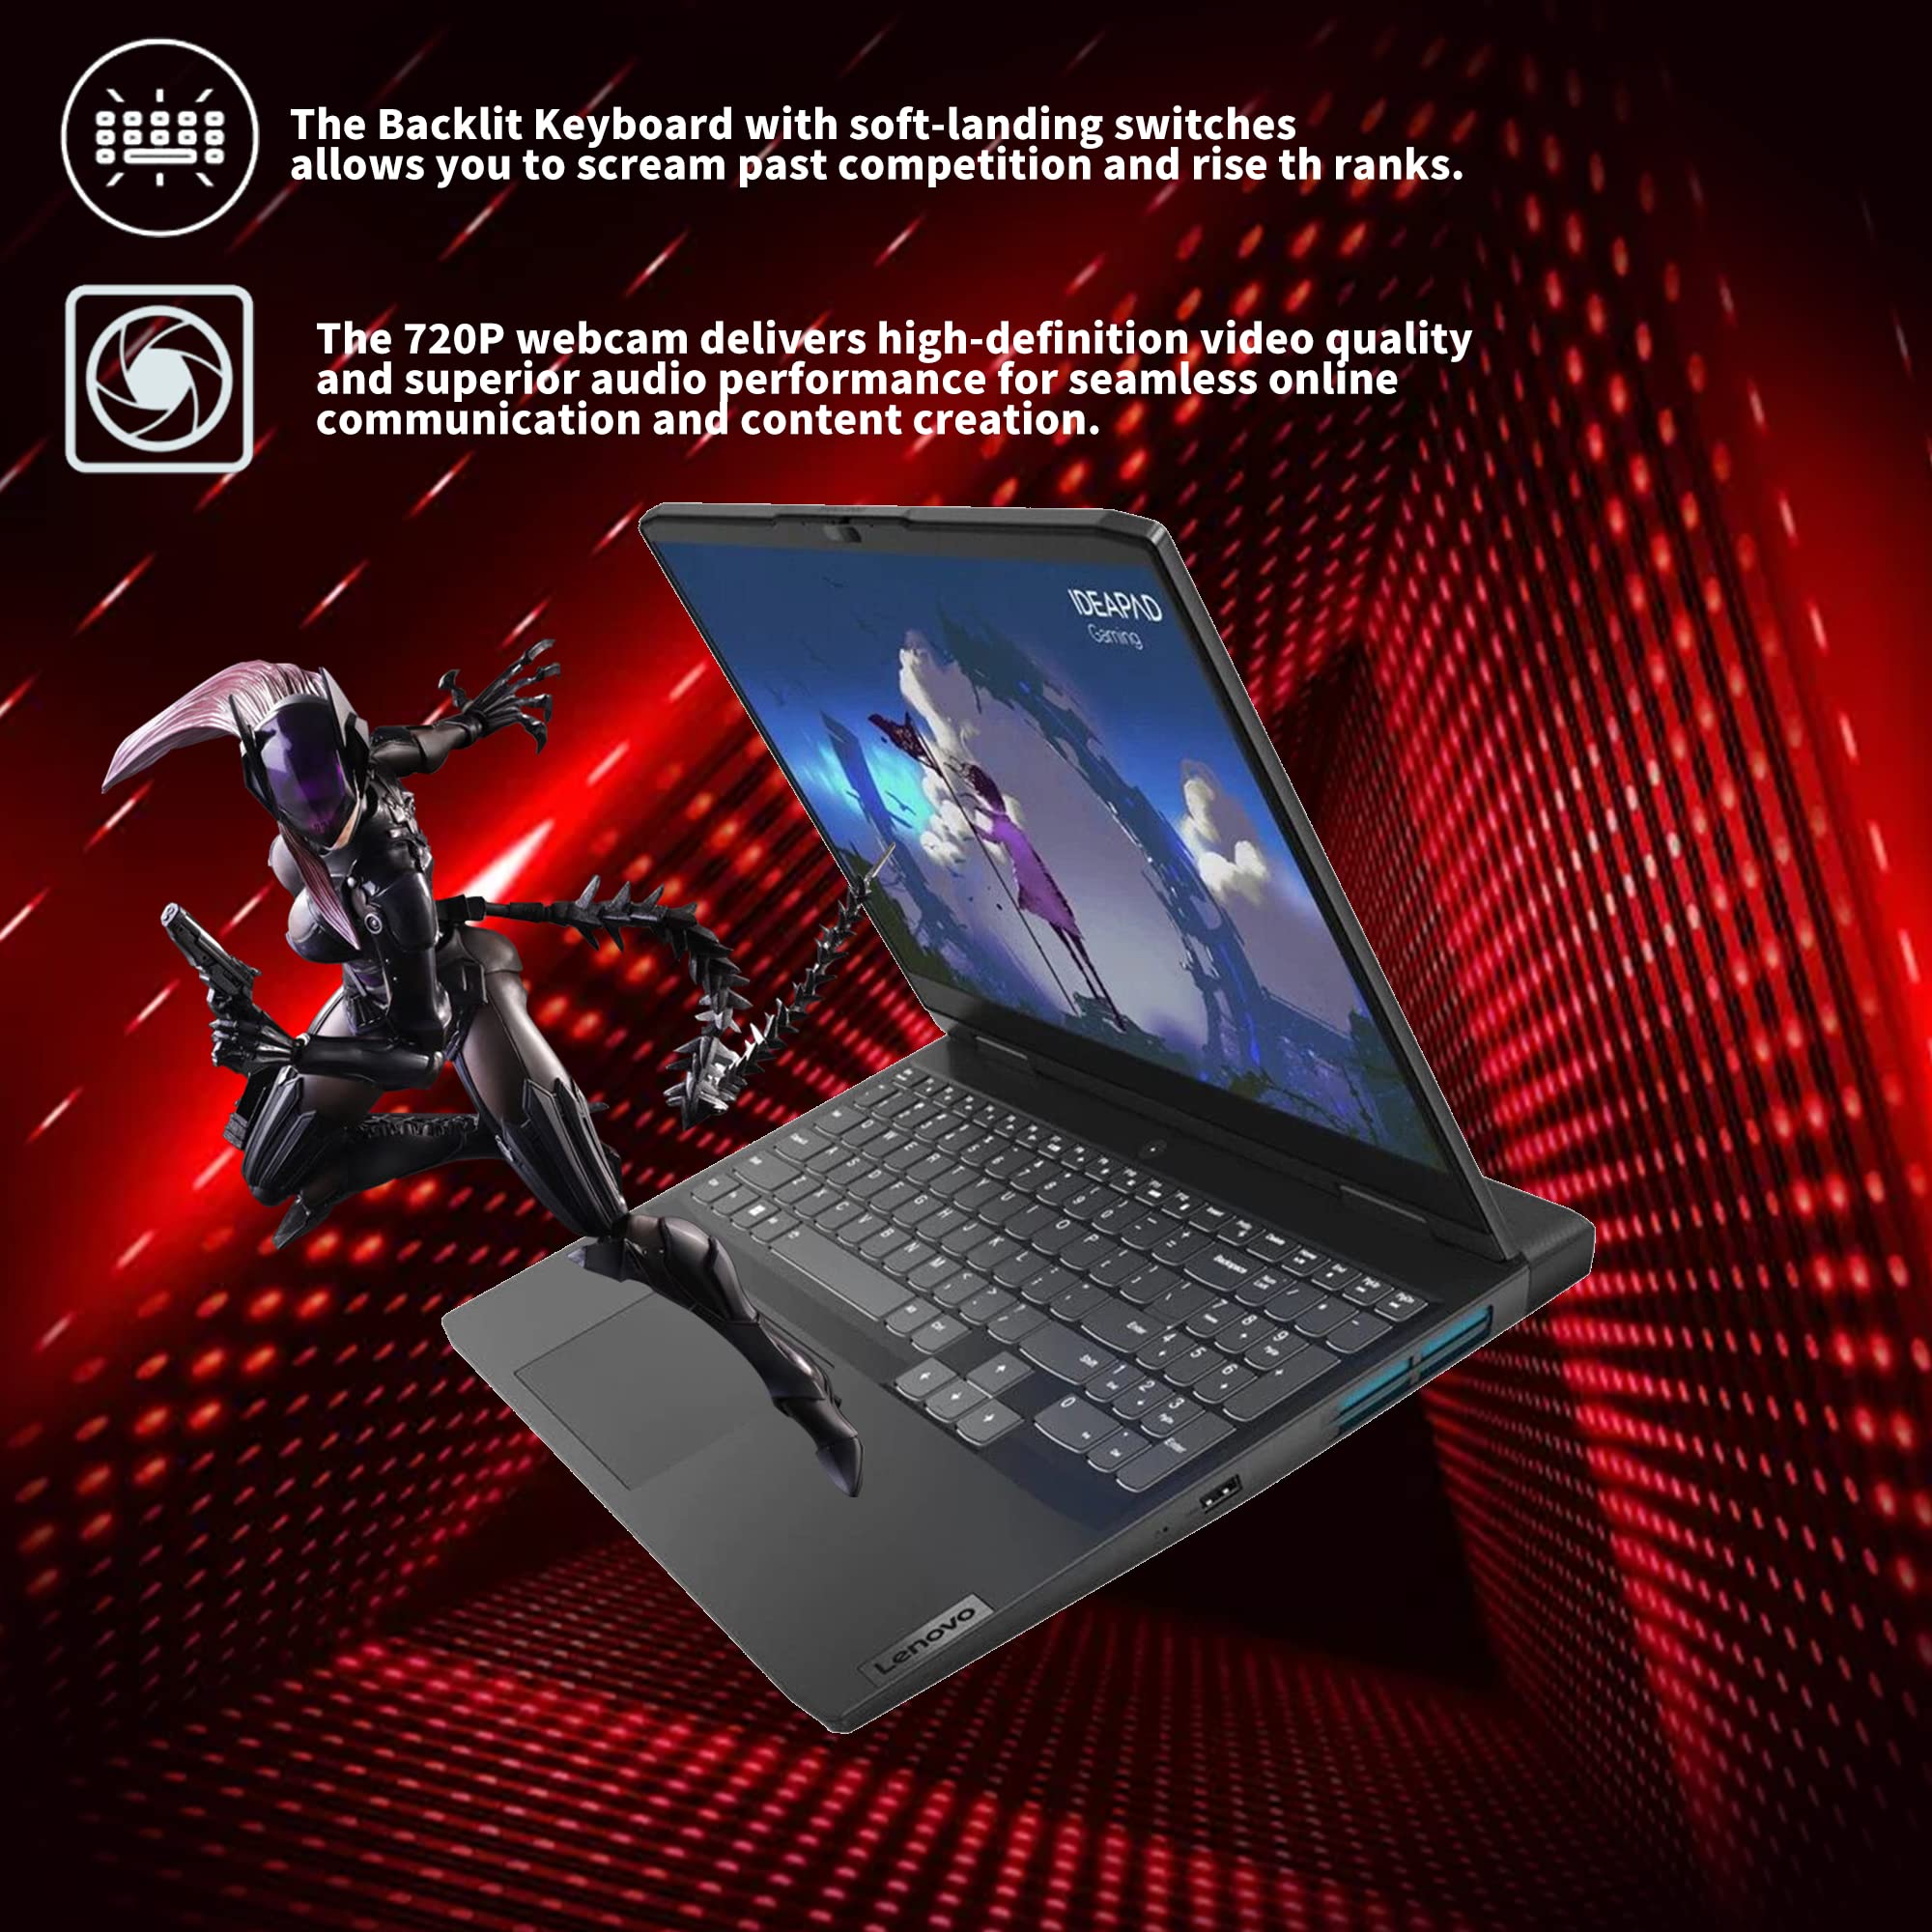 LENOVO IdeaPad Gaming 3i 15.6" FHD 120Hz Laptop, 12th Gen Intel Core i7-12700H, 32GB RAM, 1TB PCIe SSD, Backlit Keyboard, NVIDIA GeForce RTX 3050Ti, Win 11 Pro, Gray, 32GB Hotface USB Card